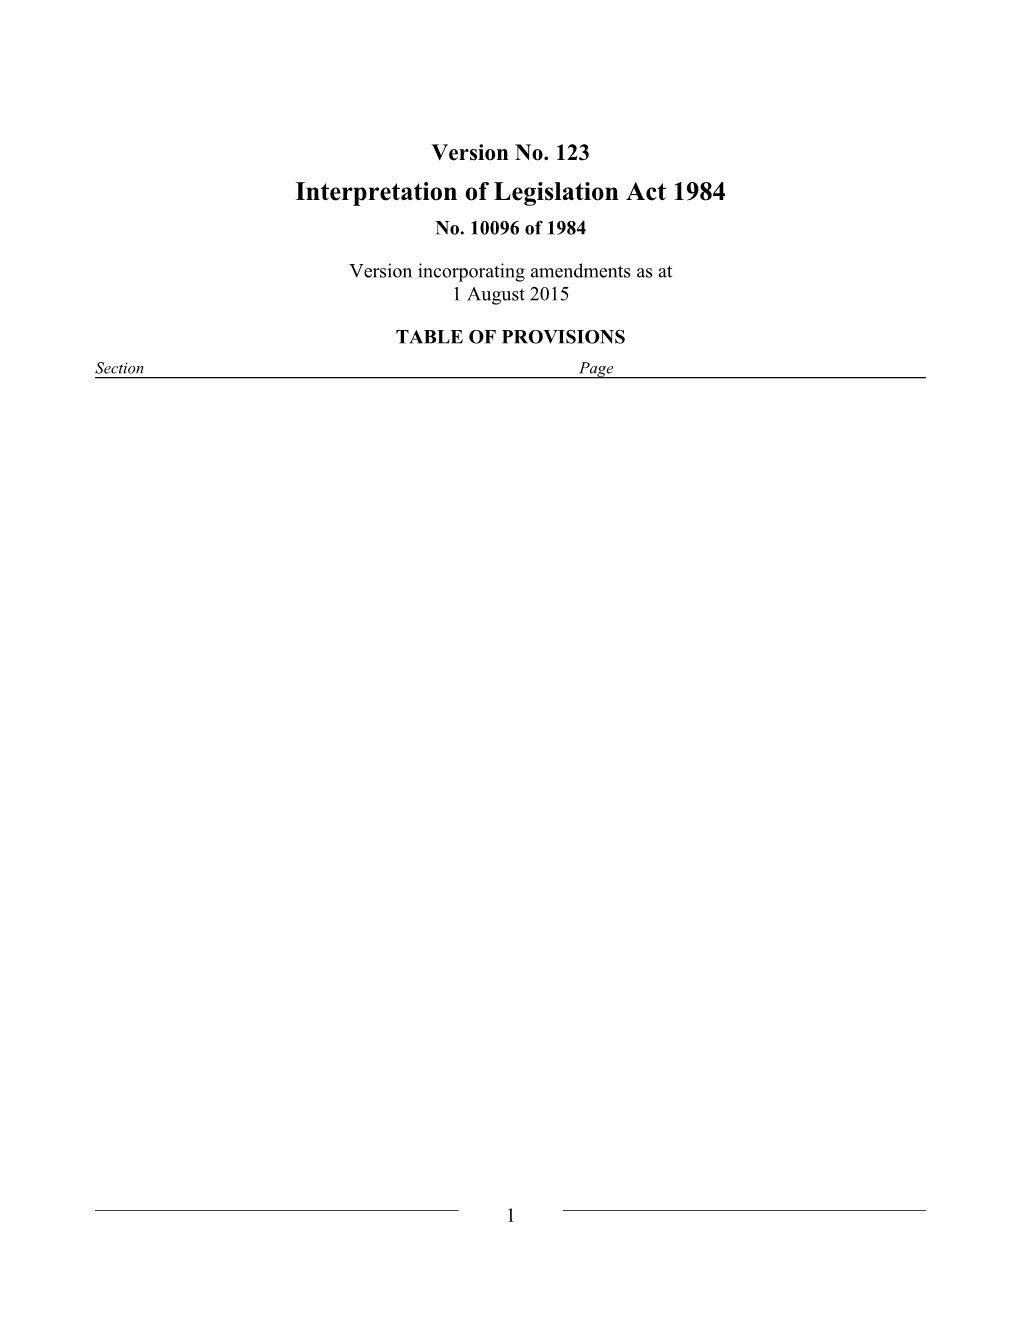 Interpretation of Legislation Act 1984